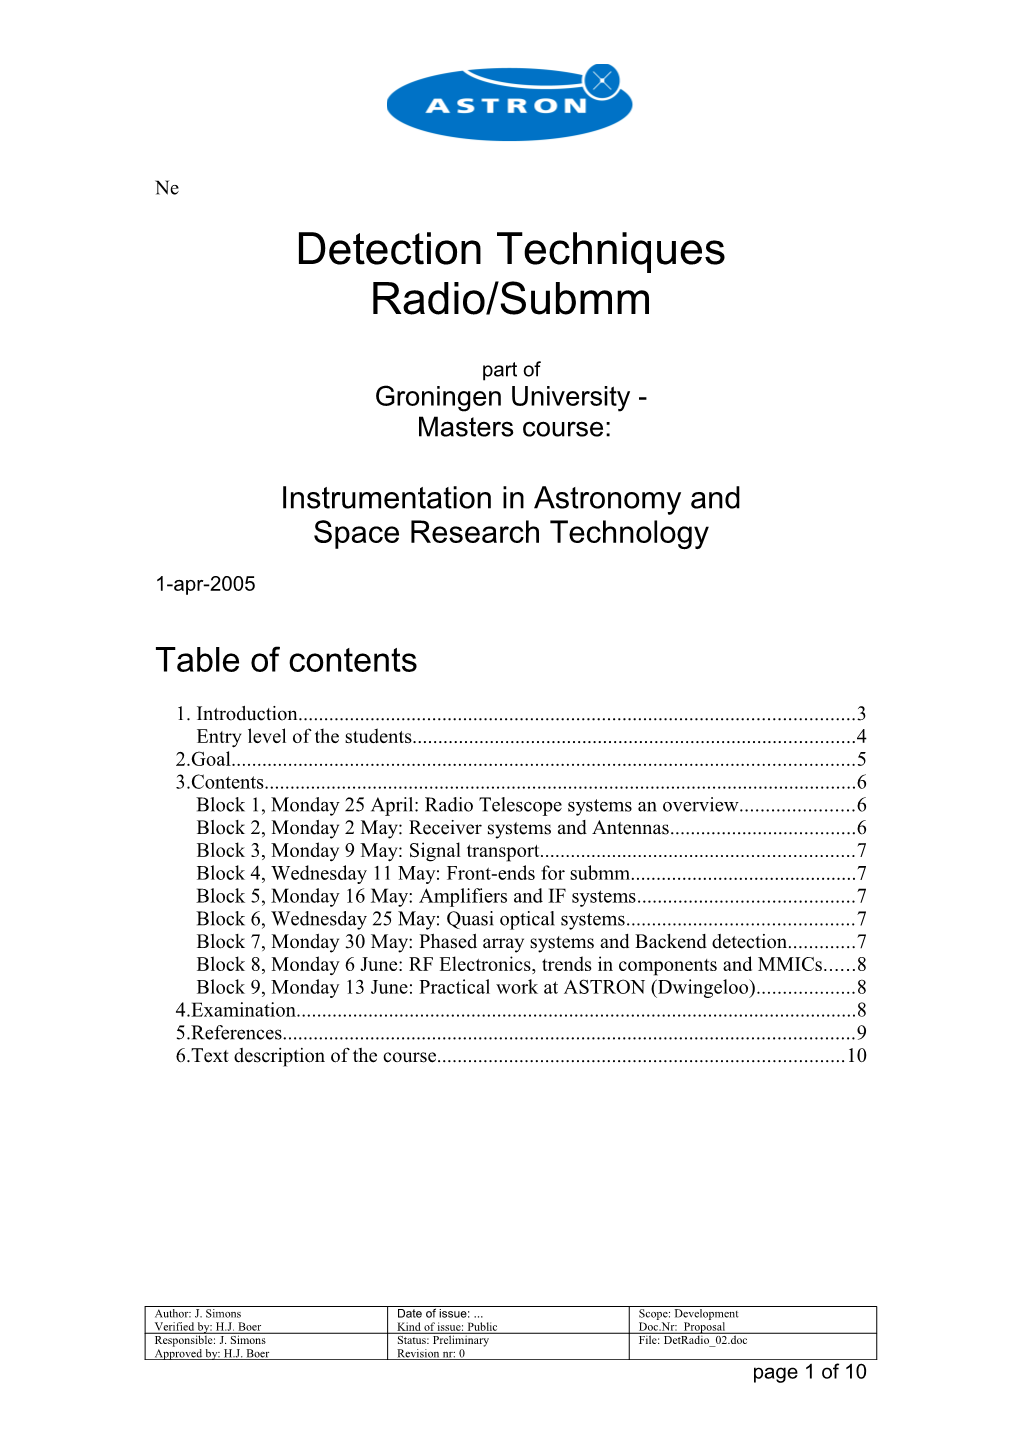 Detection Techniques Radio/Submm